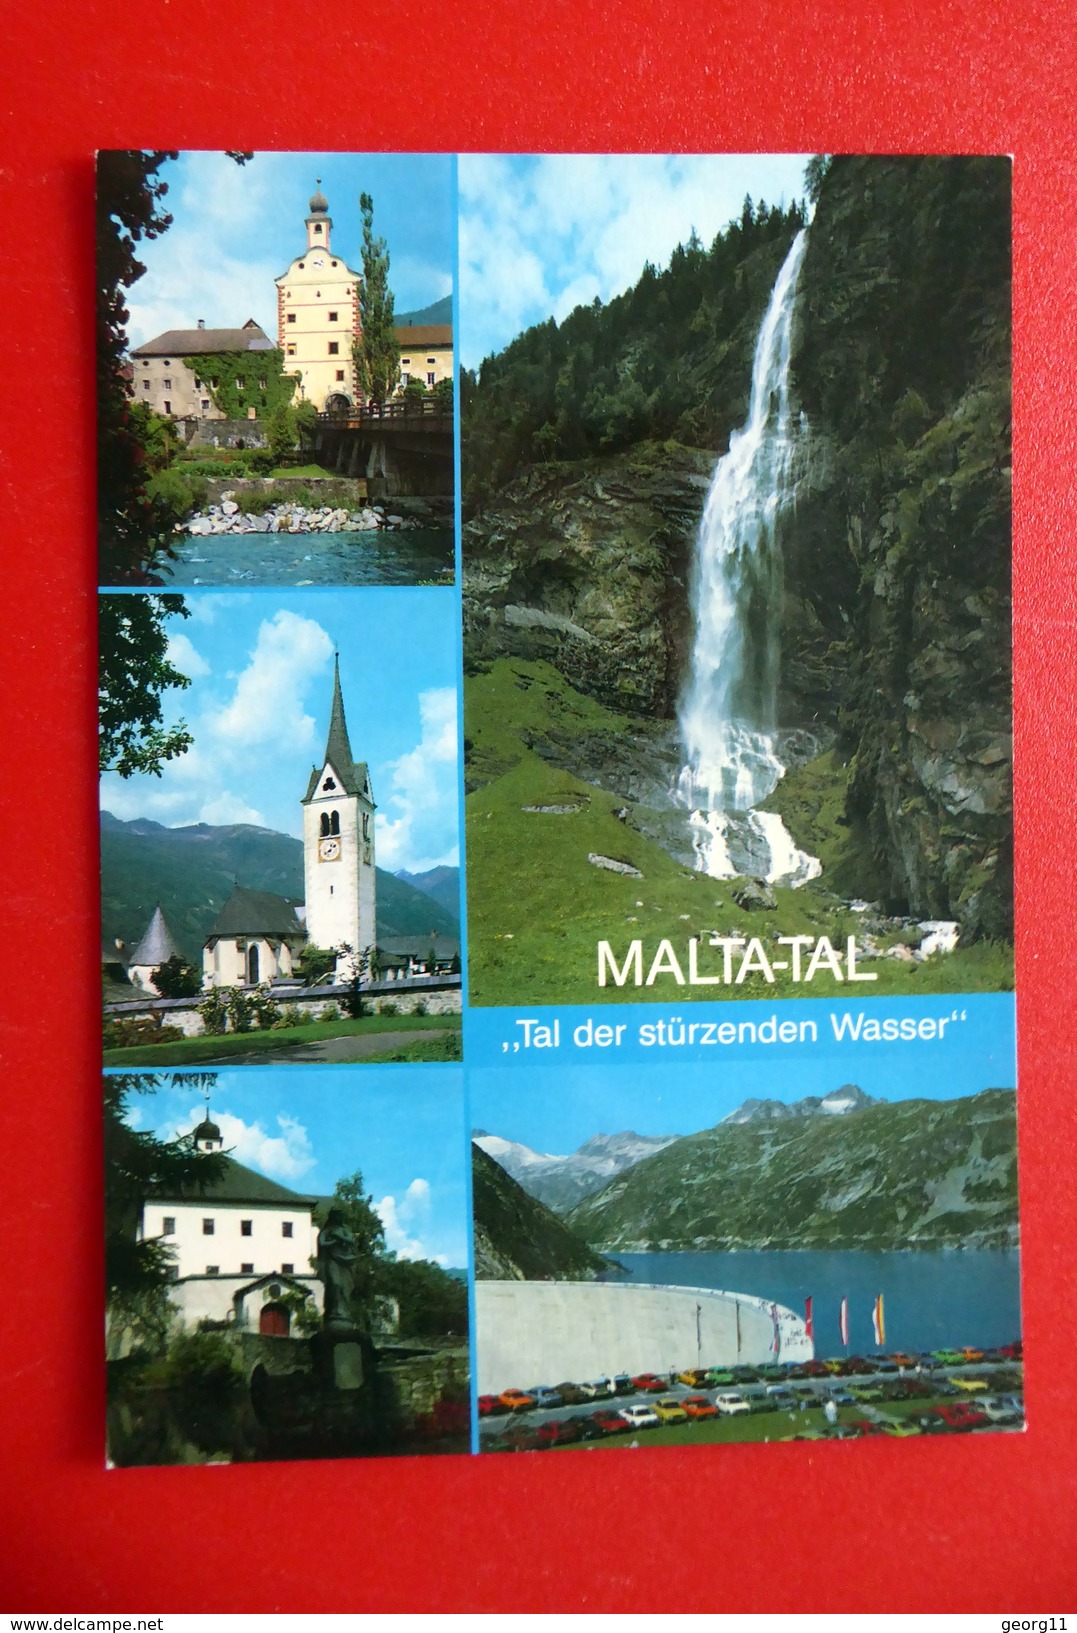 Maltatal - Malta - Spittal An Der Drau - Kärnten - Tal Der Stürzenden Wasser - Gmünd - Kölnbreinsperre - Spittal An Der Drau